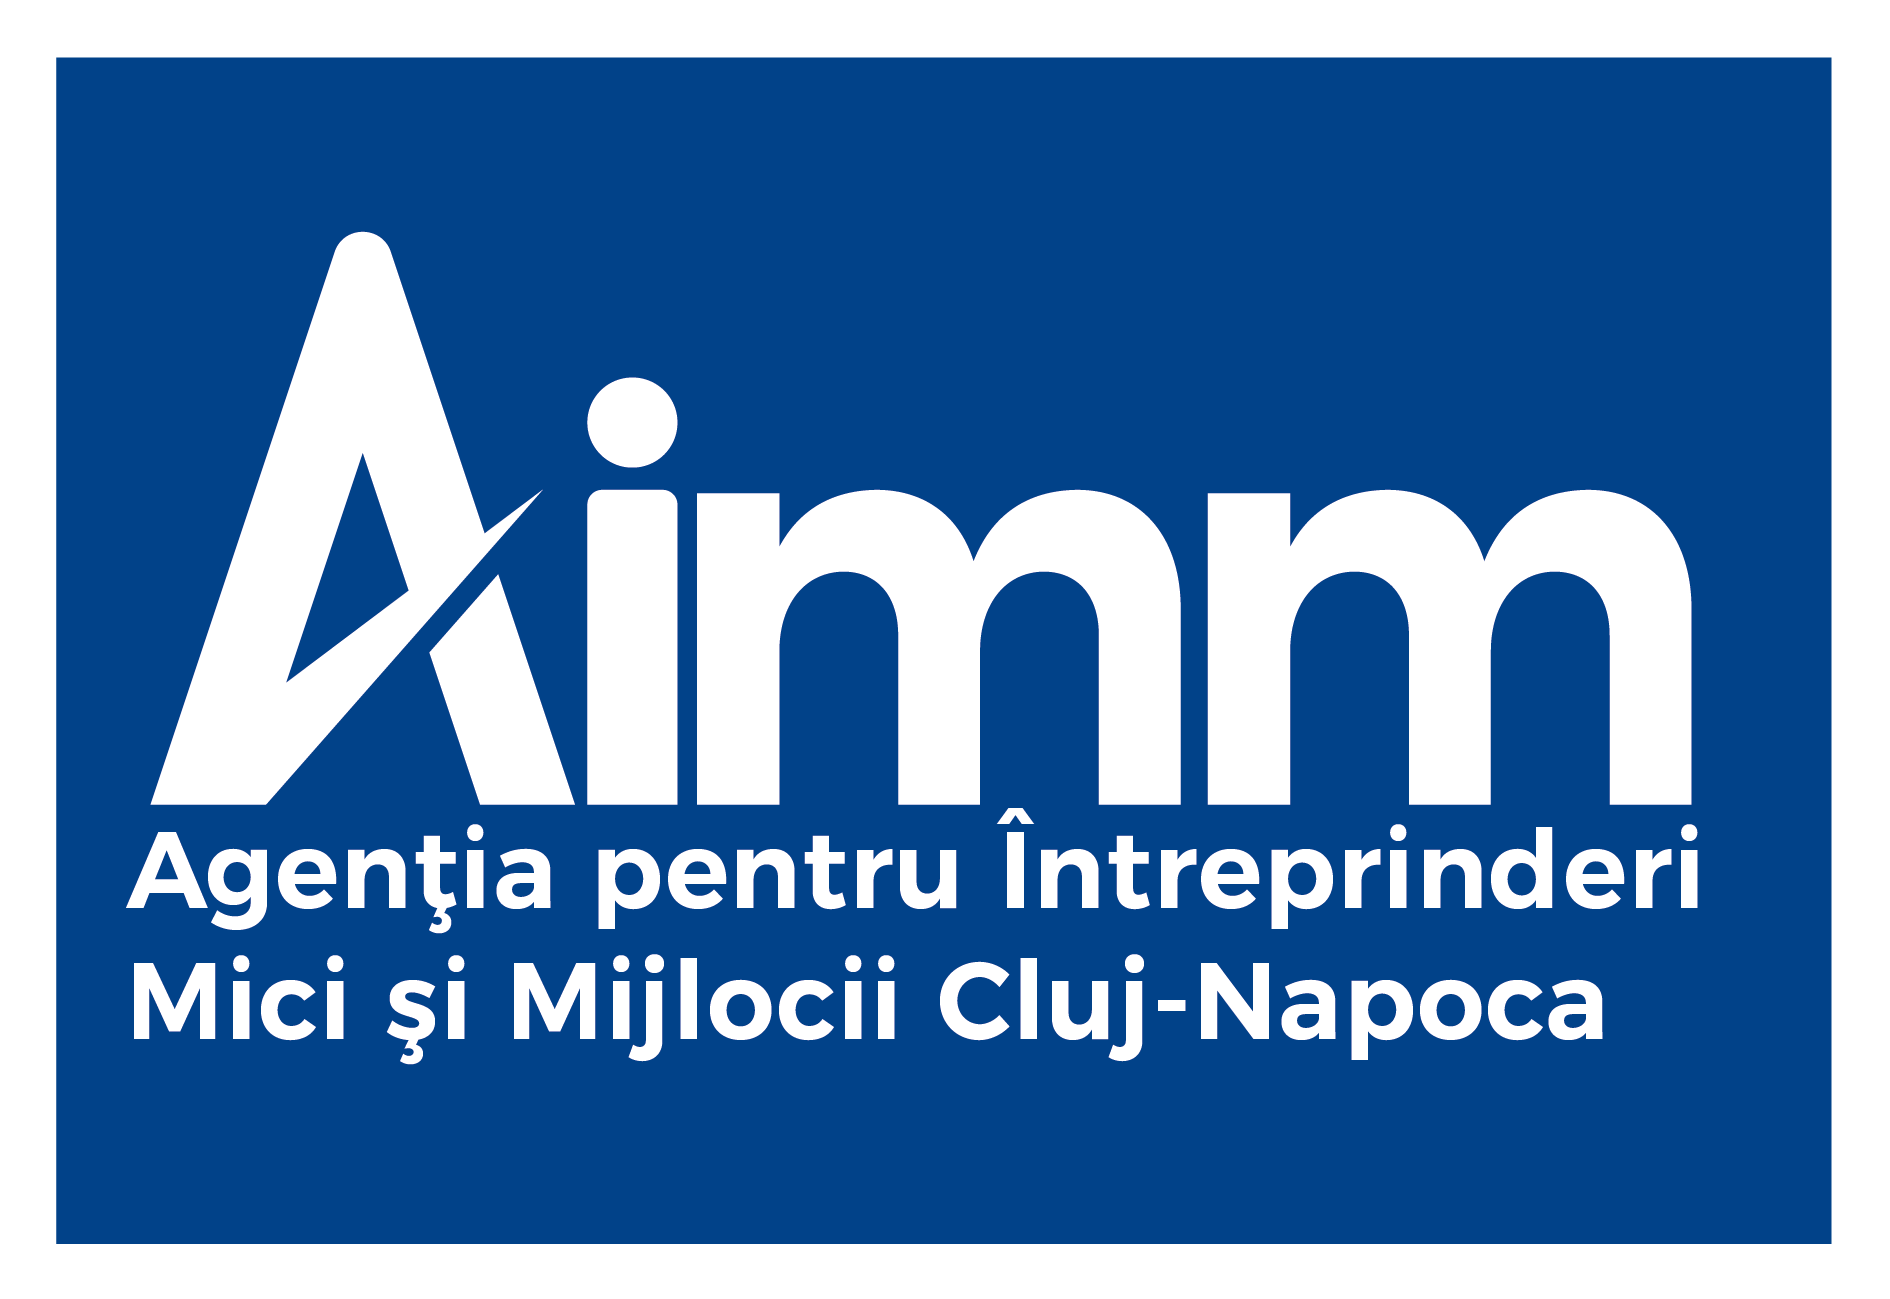 AIMM ClujNapoca